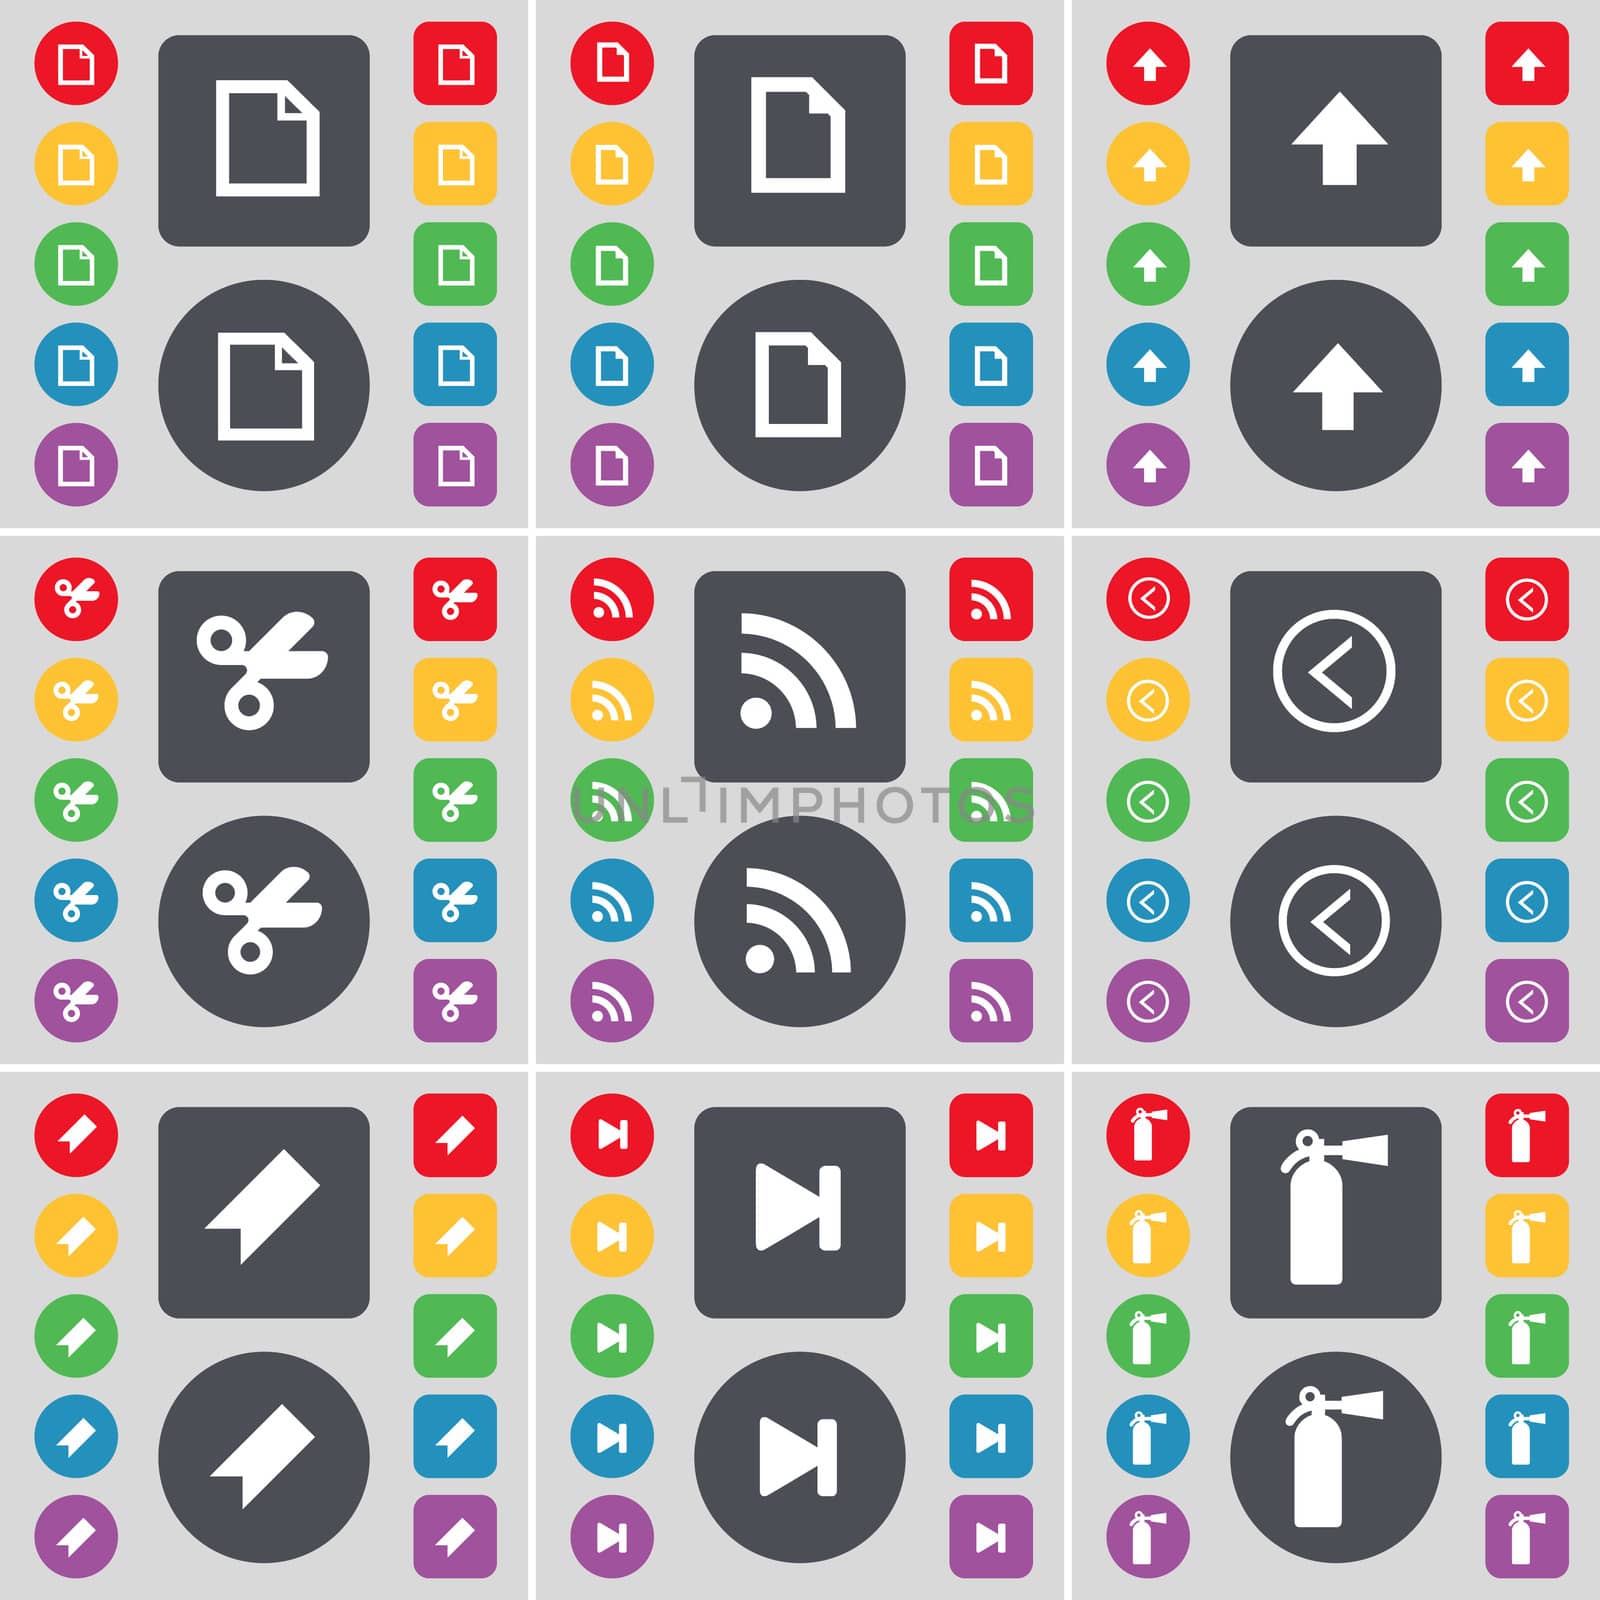 File, Arrow up, Scissors, RSS, Arrow left, Marker, Media skip, Fire extinguisher icon symbol. A large set of flat, colored buttons for your design. illustration